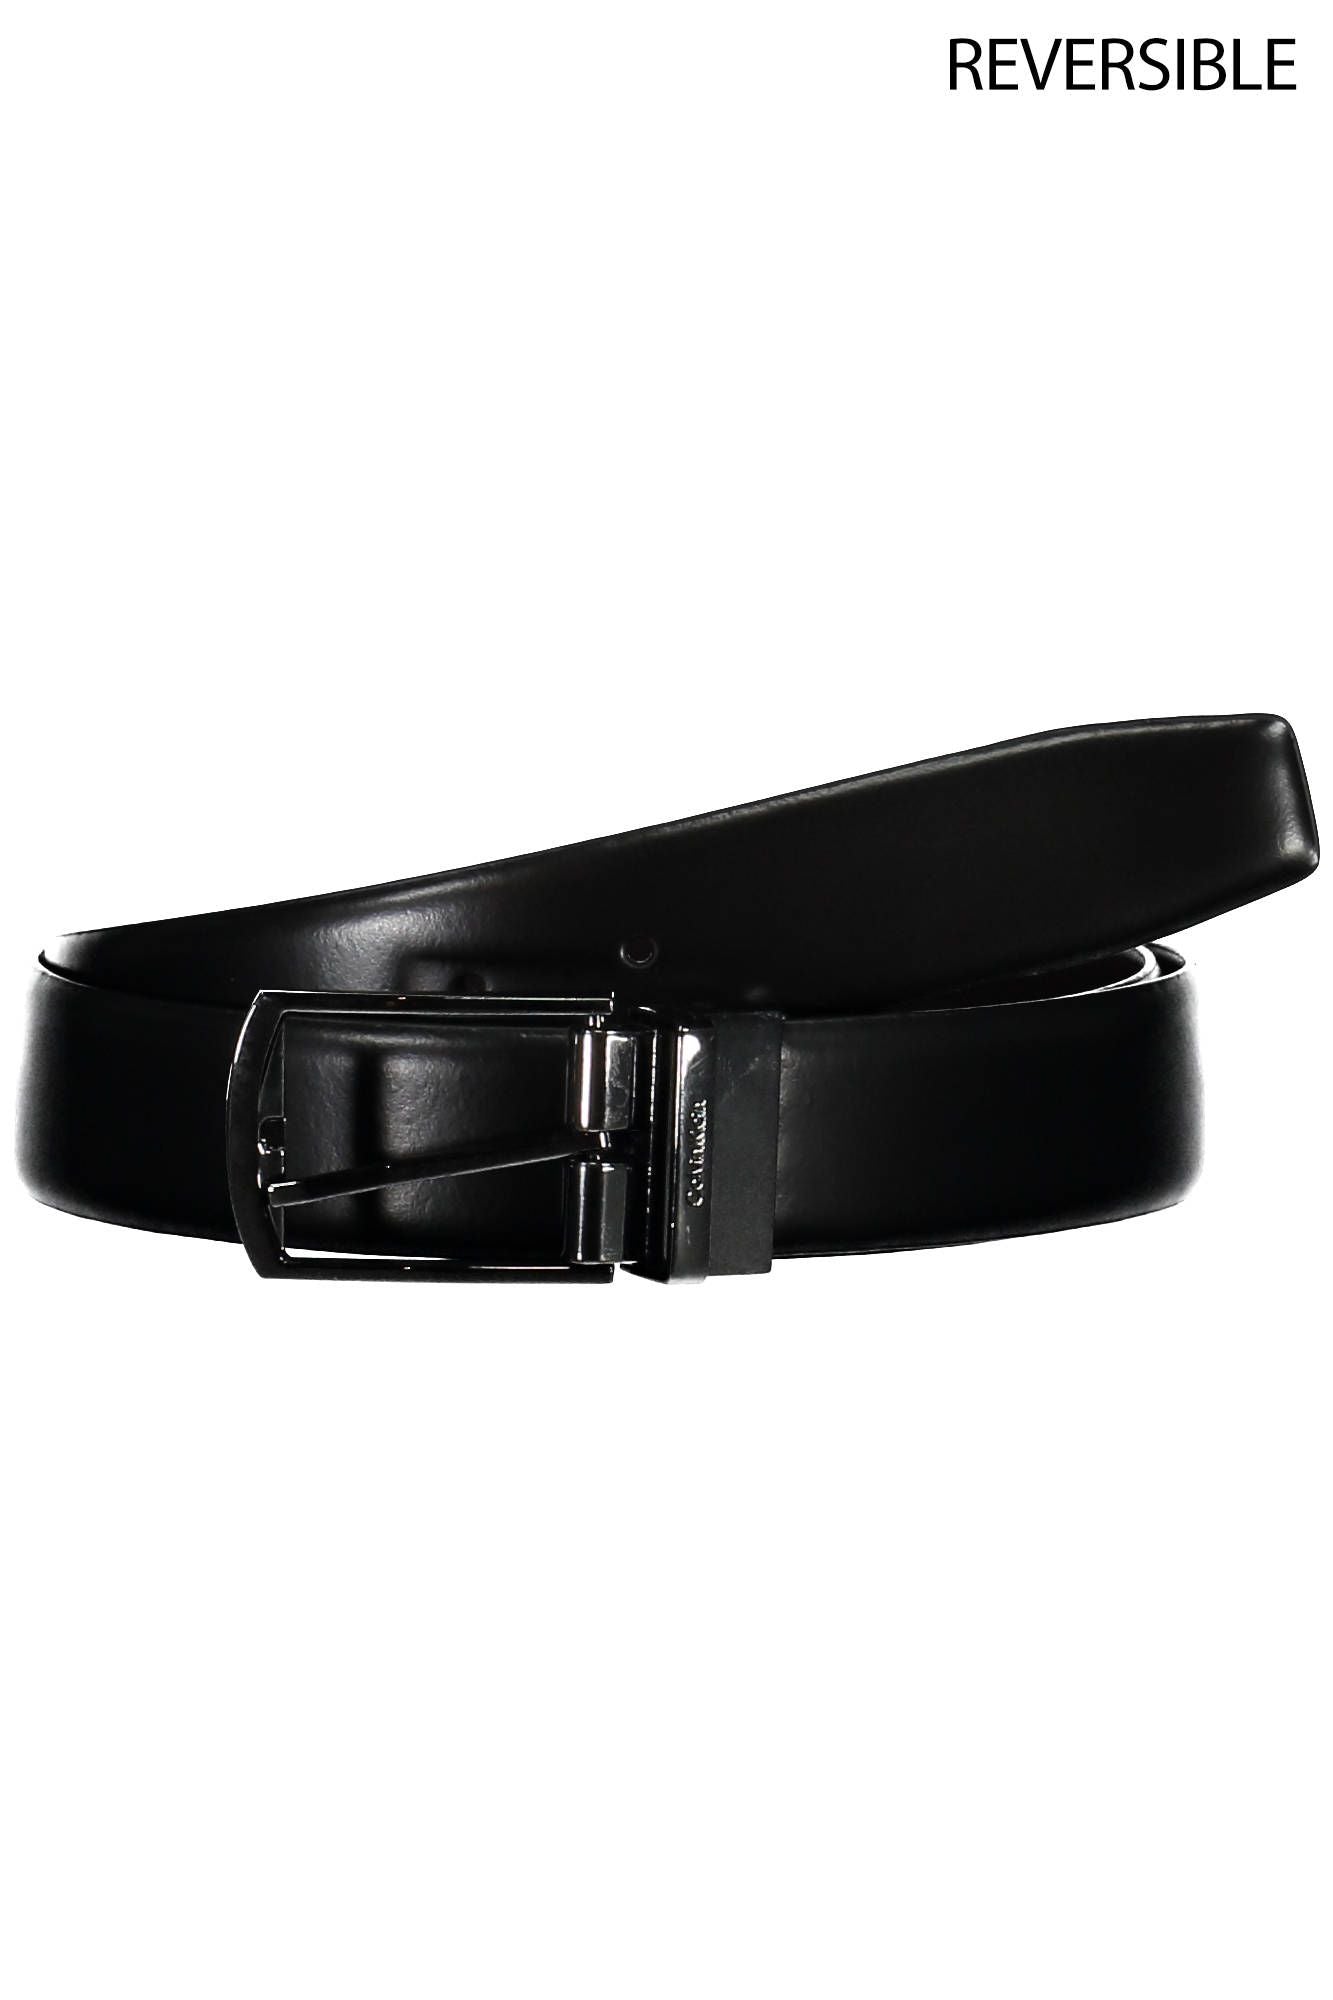 Calvin Klein Reversible Black Leather Belt